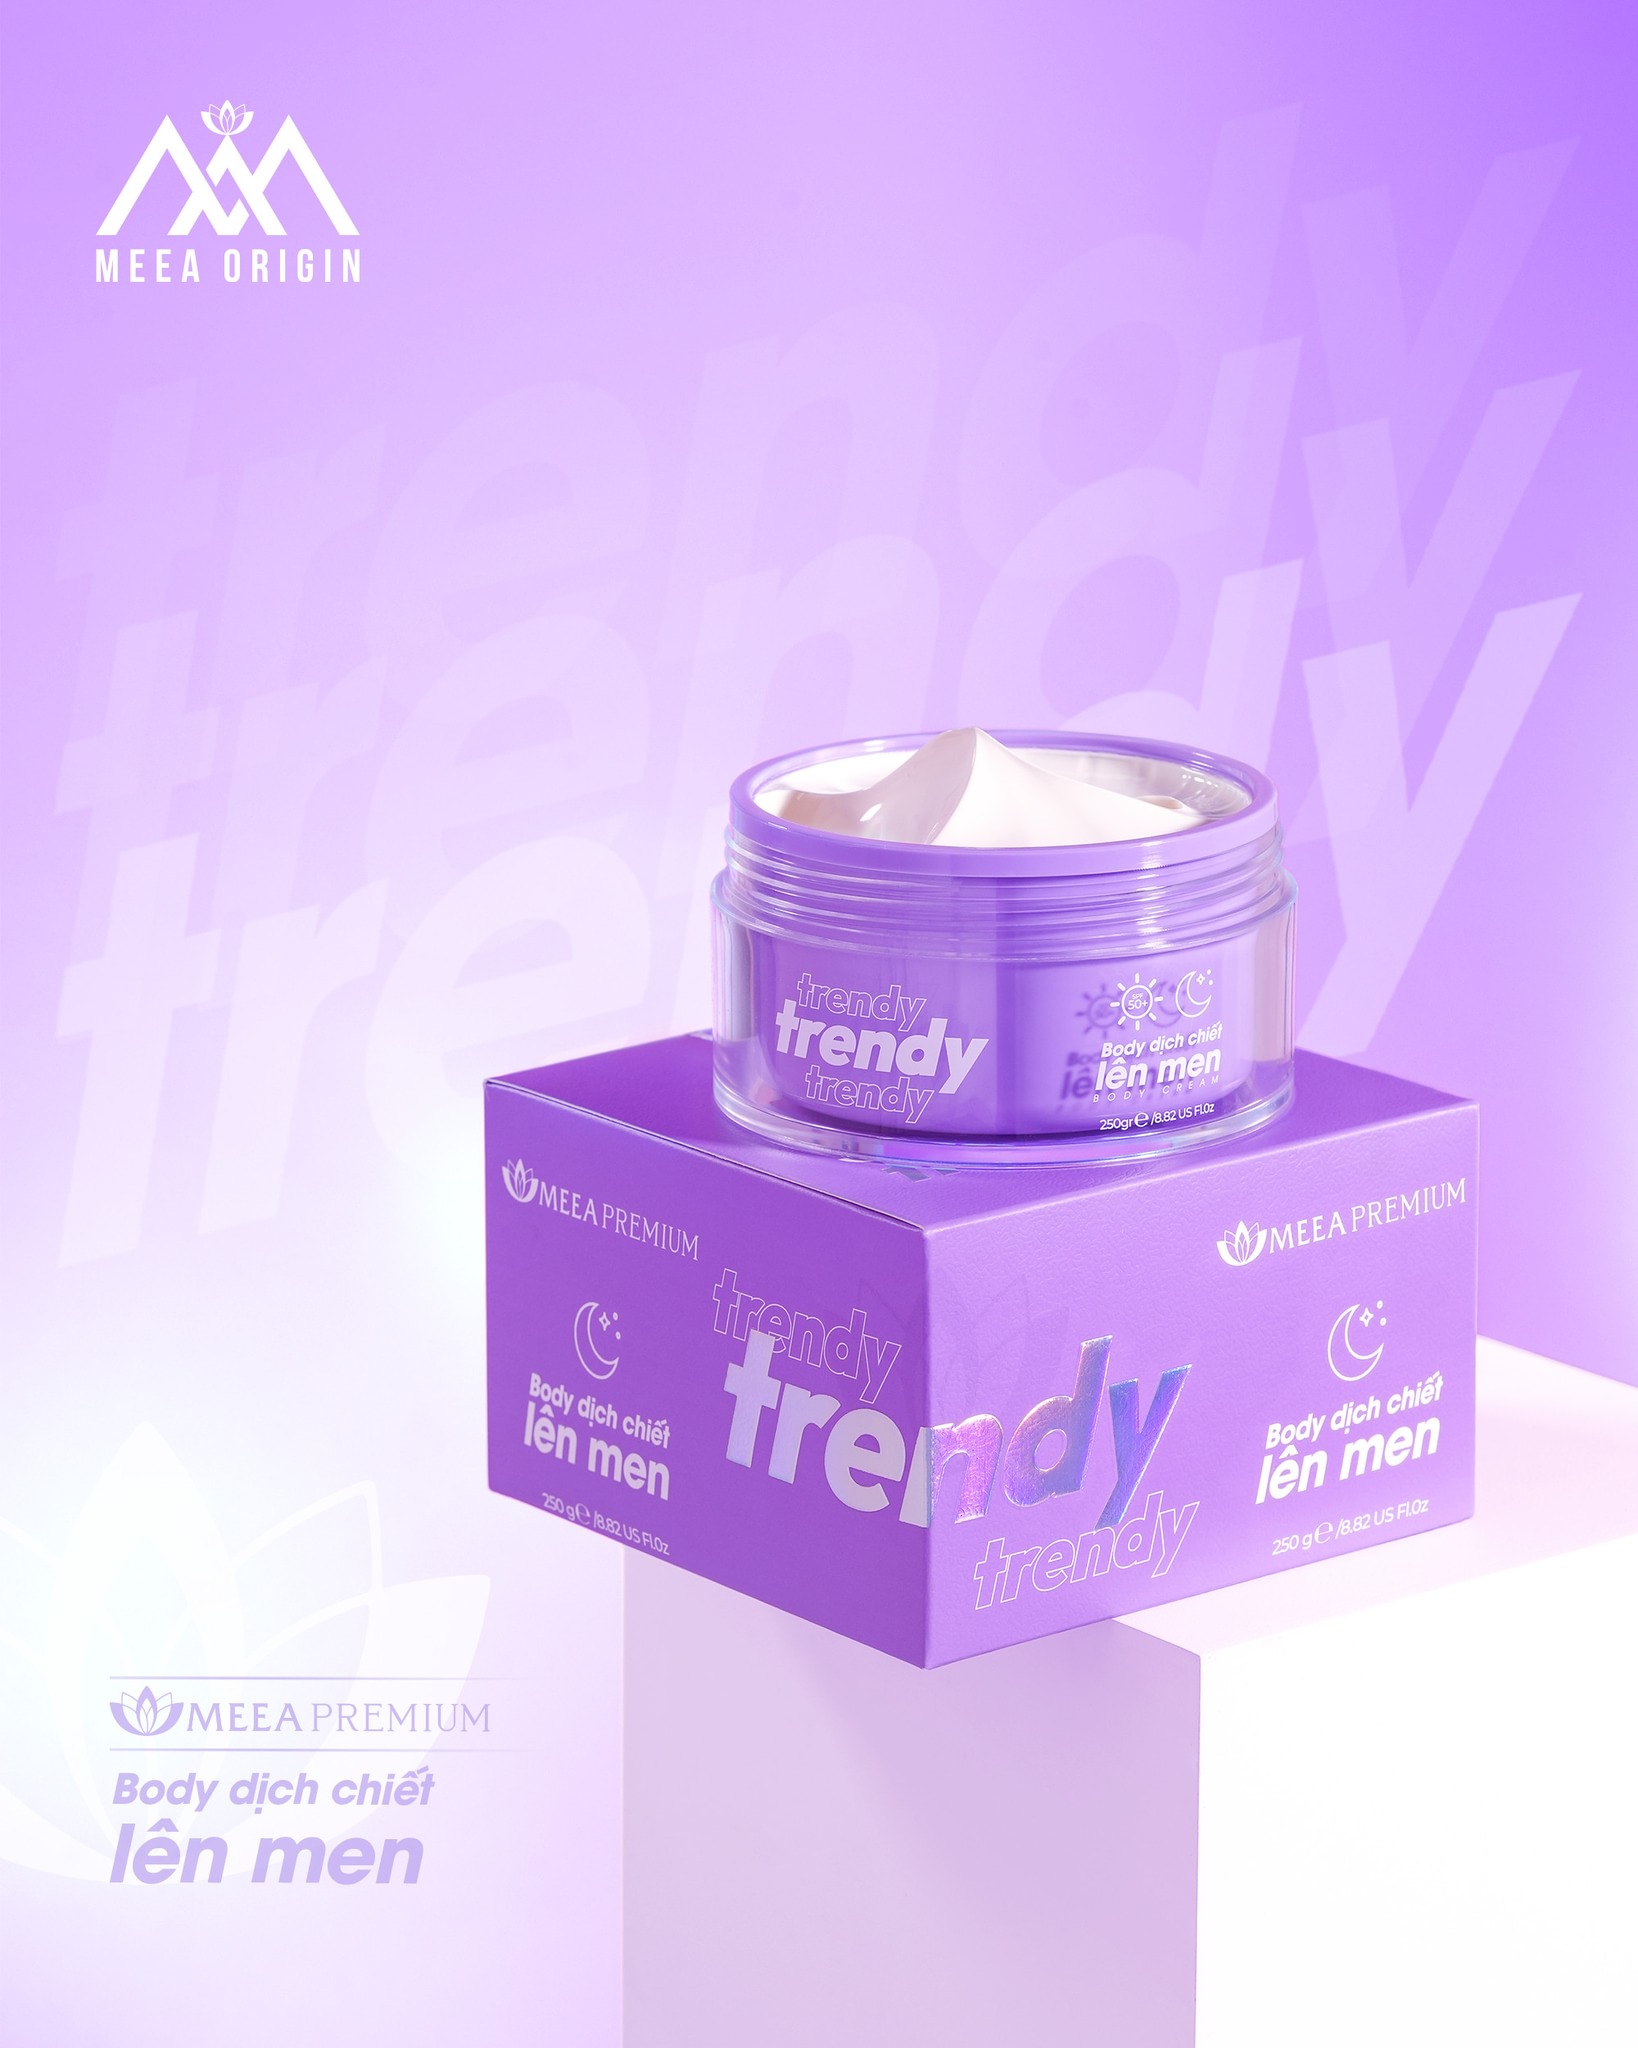 Trendy Meea Premium Body Cream Fermented Extract Get 1 Free White Mask